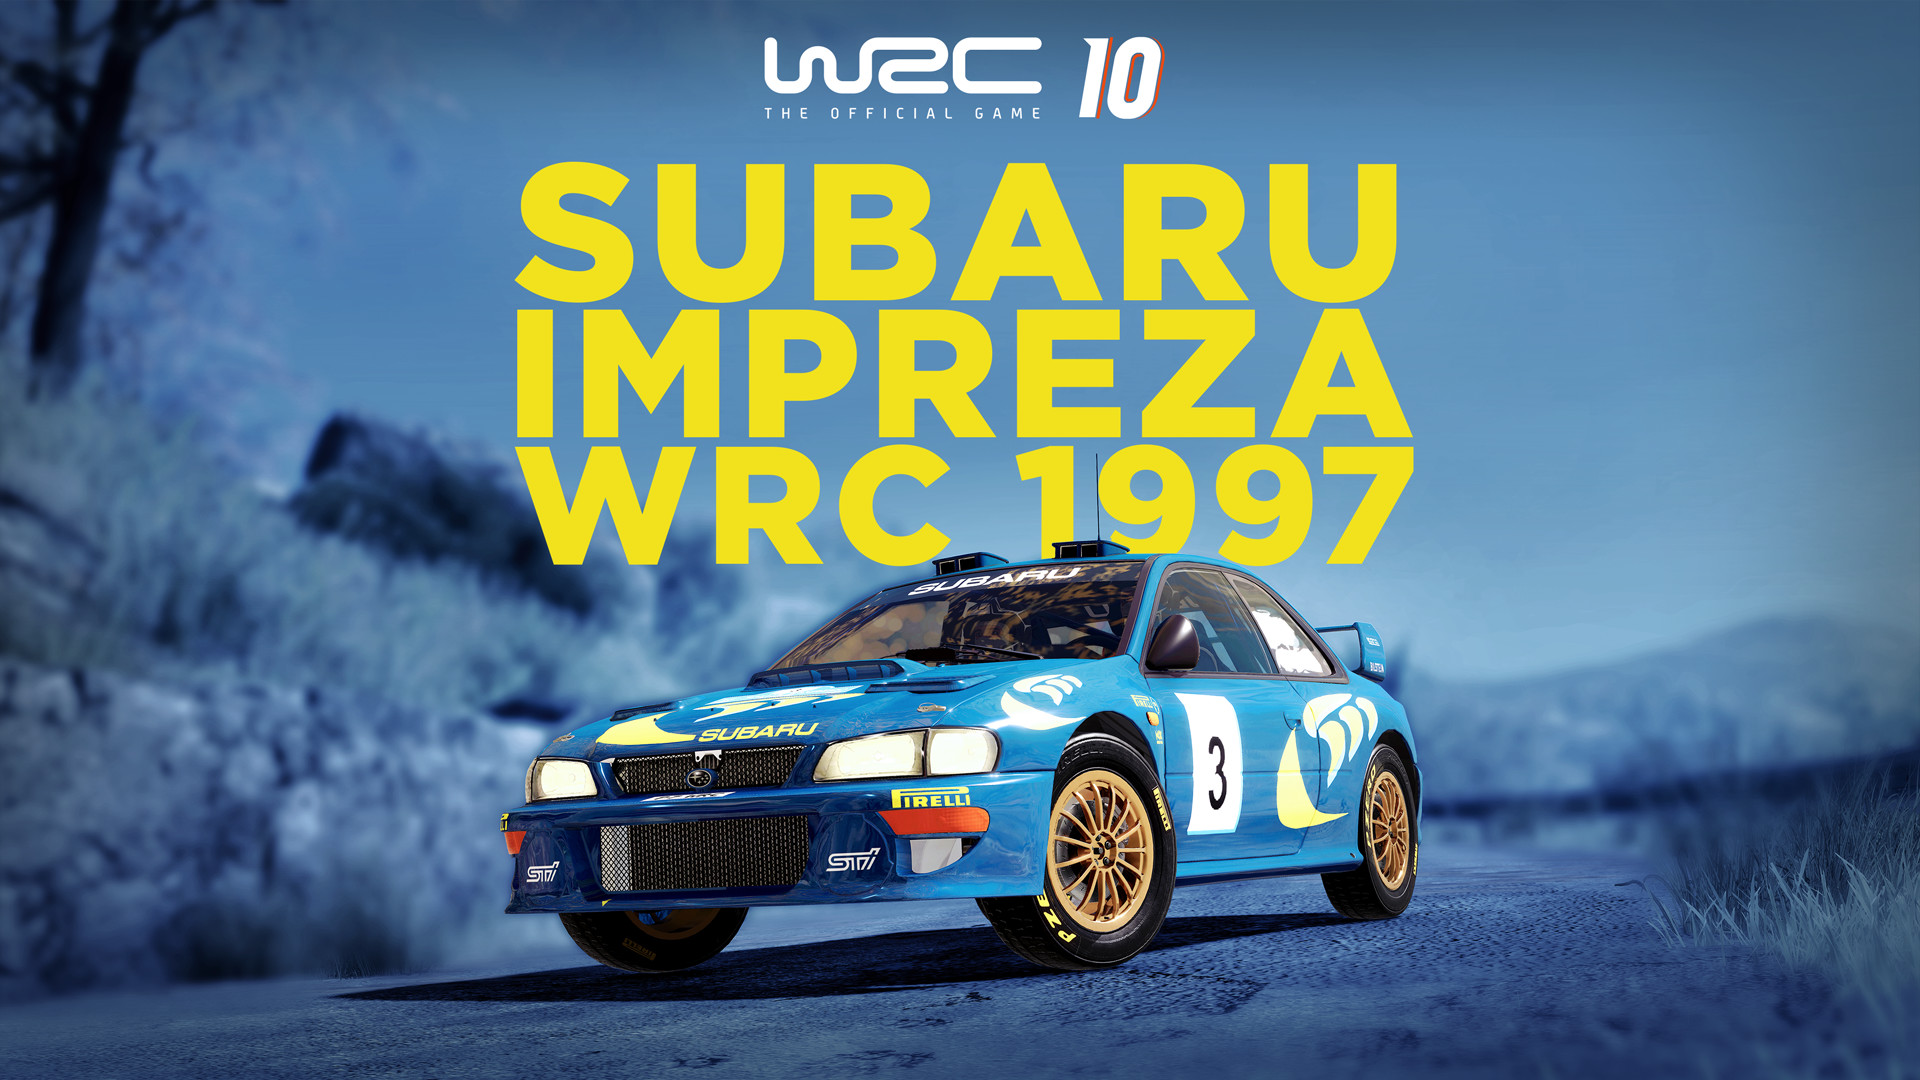 WRC 10 - Subaru Impreza WRC 1997 DLC Steam CD Key 3.33 usd